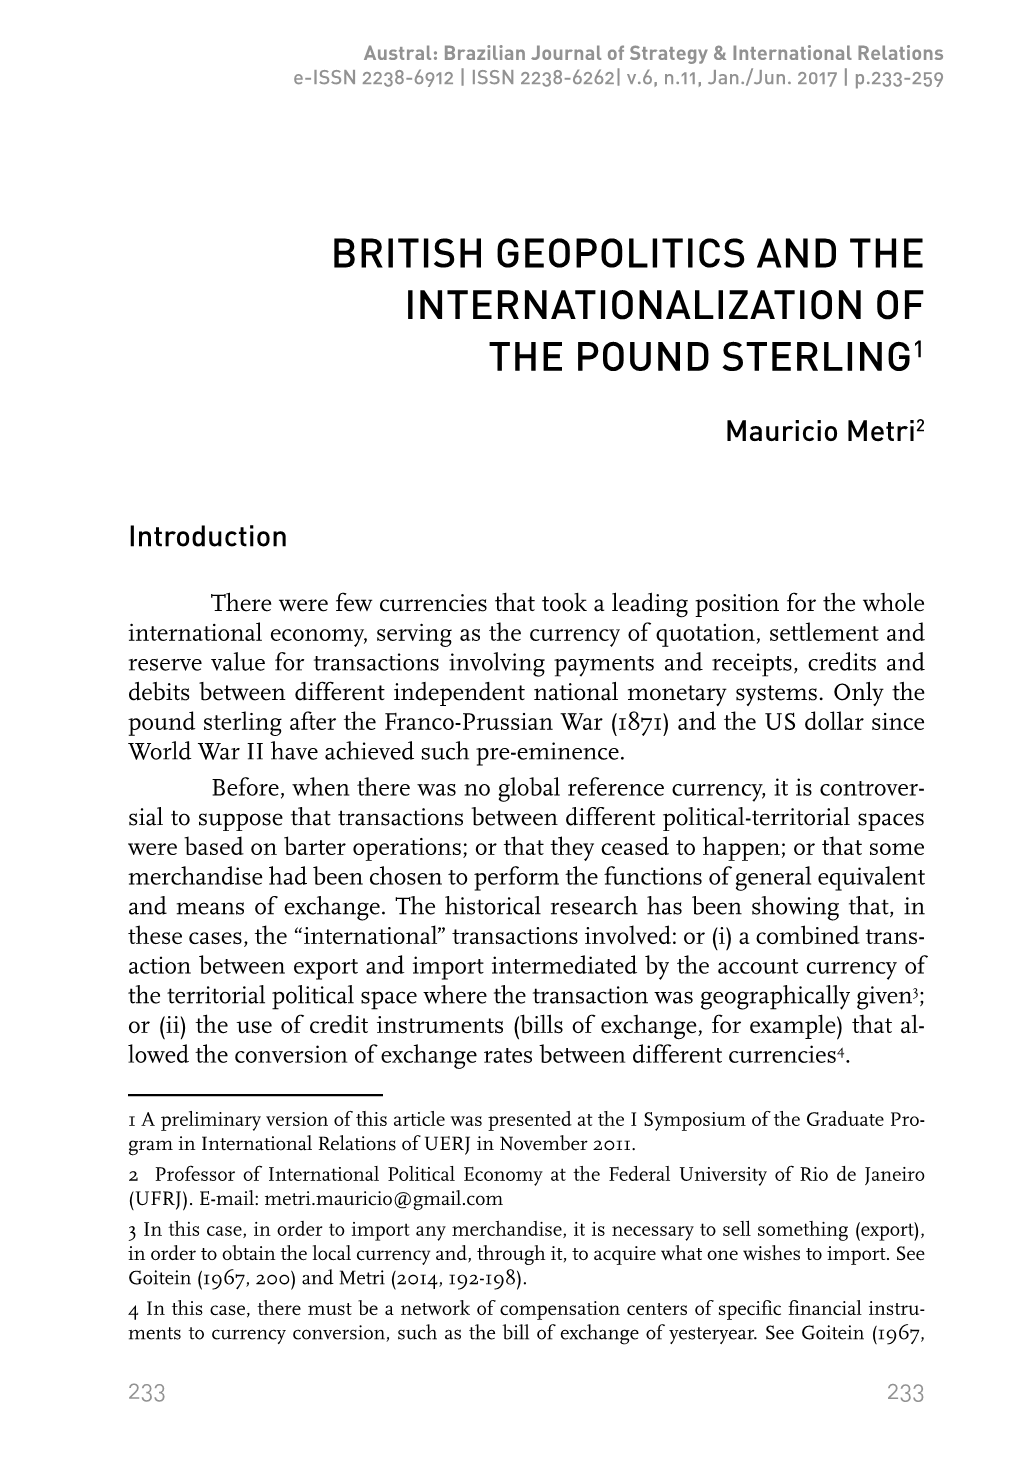 British Geopolitics and the Internationalization of the Pound Sterling1